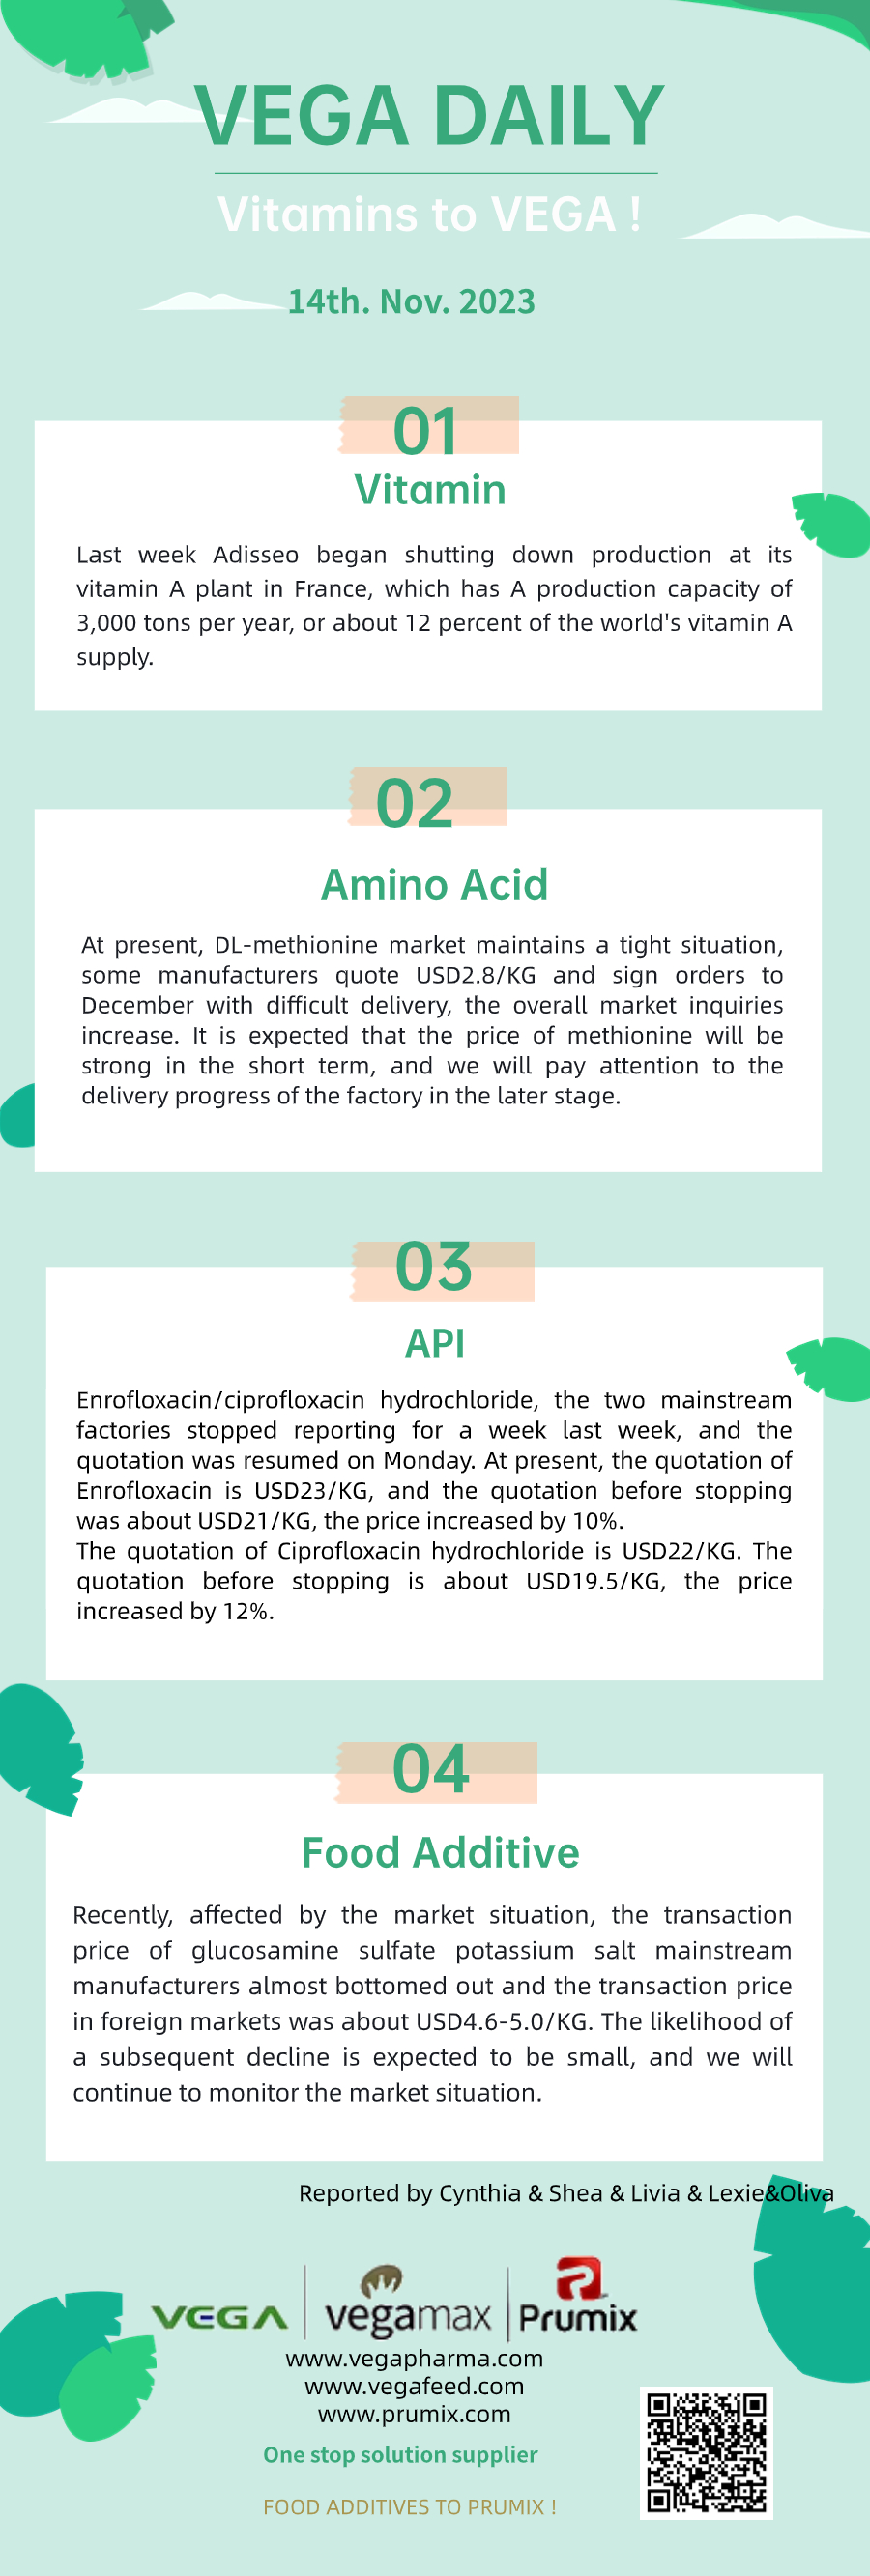 Vega Daily Dated on Nov 14th 2023 Vitamin Amino Acid API Food Additives.jpg